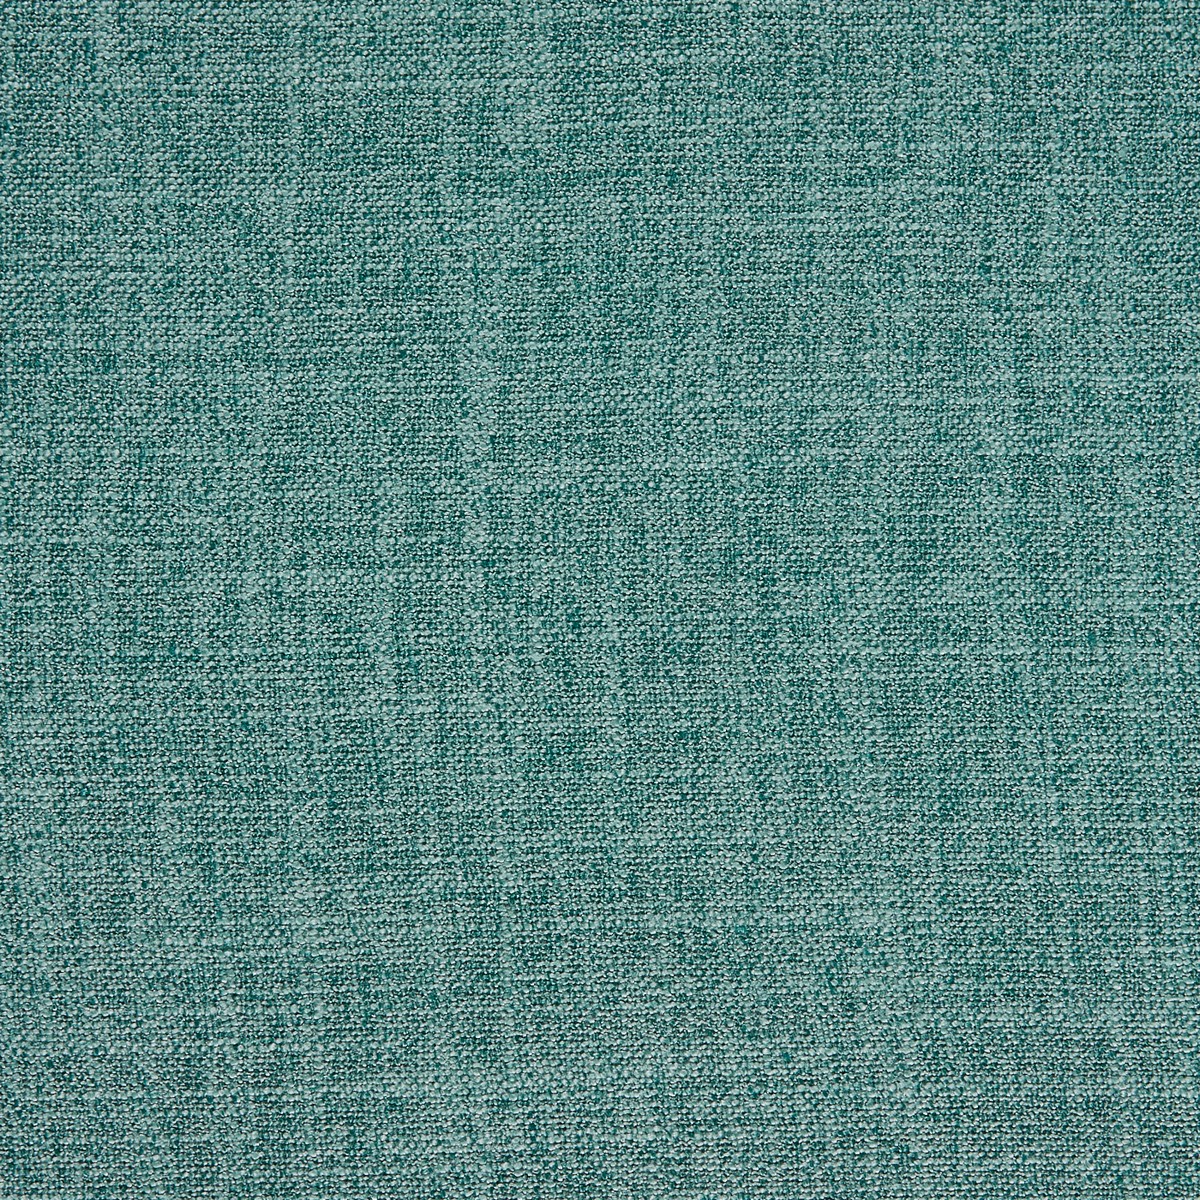 Whisp Jade Fabric by Prestigious Textiles